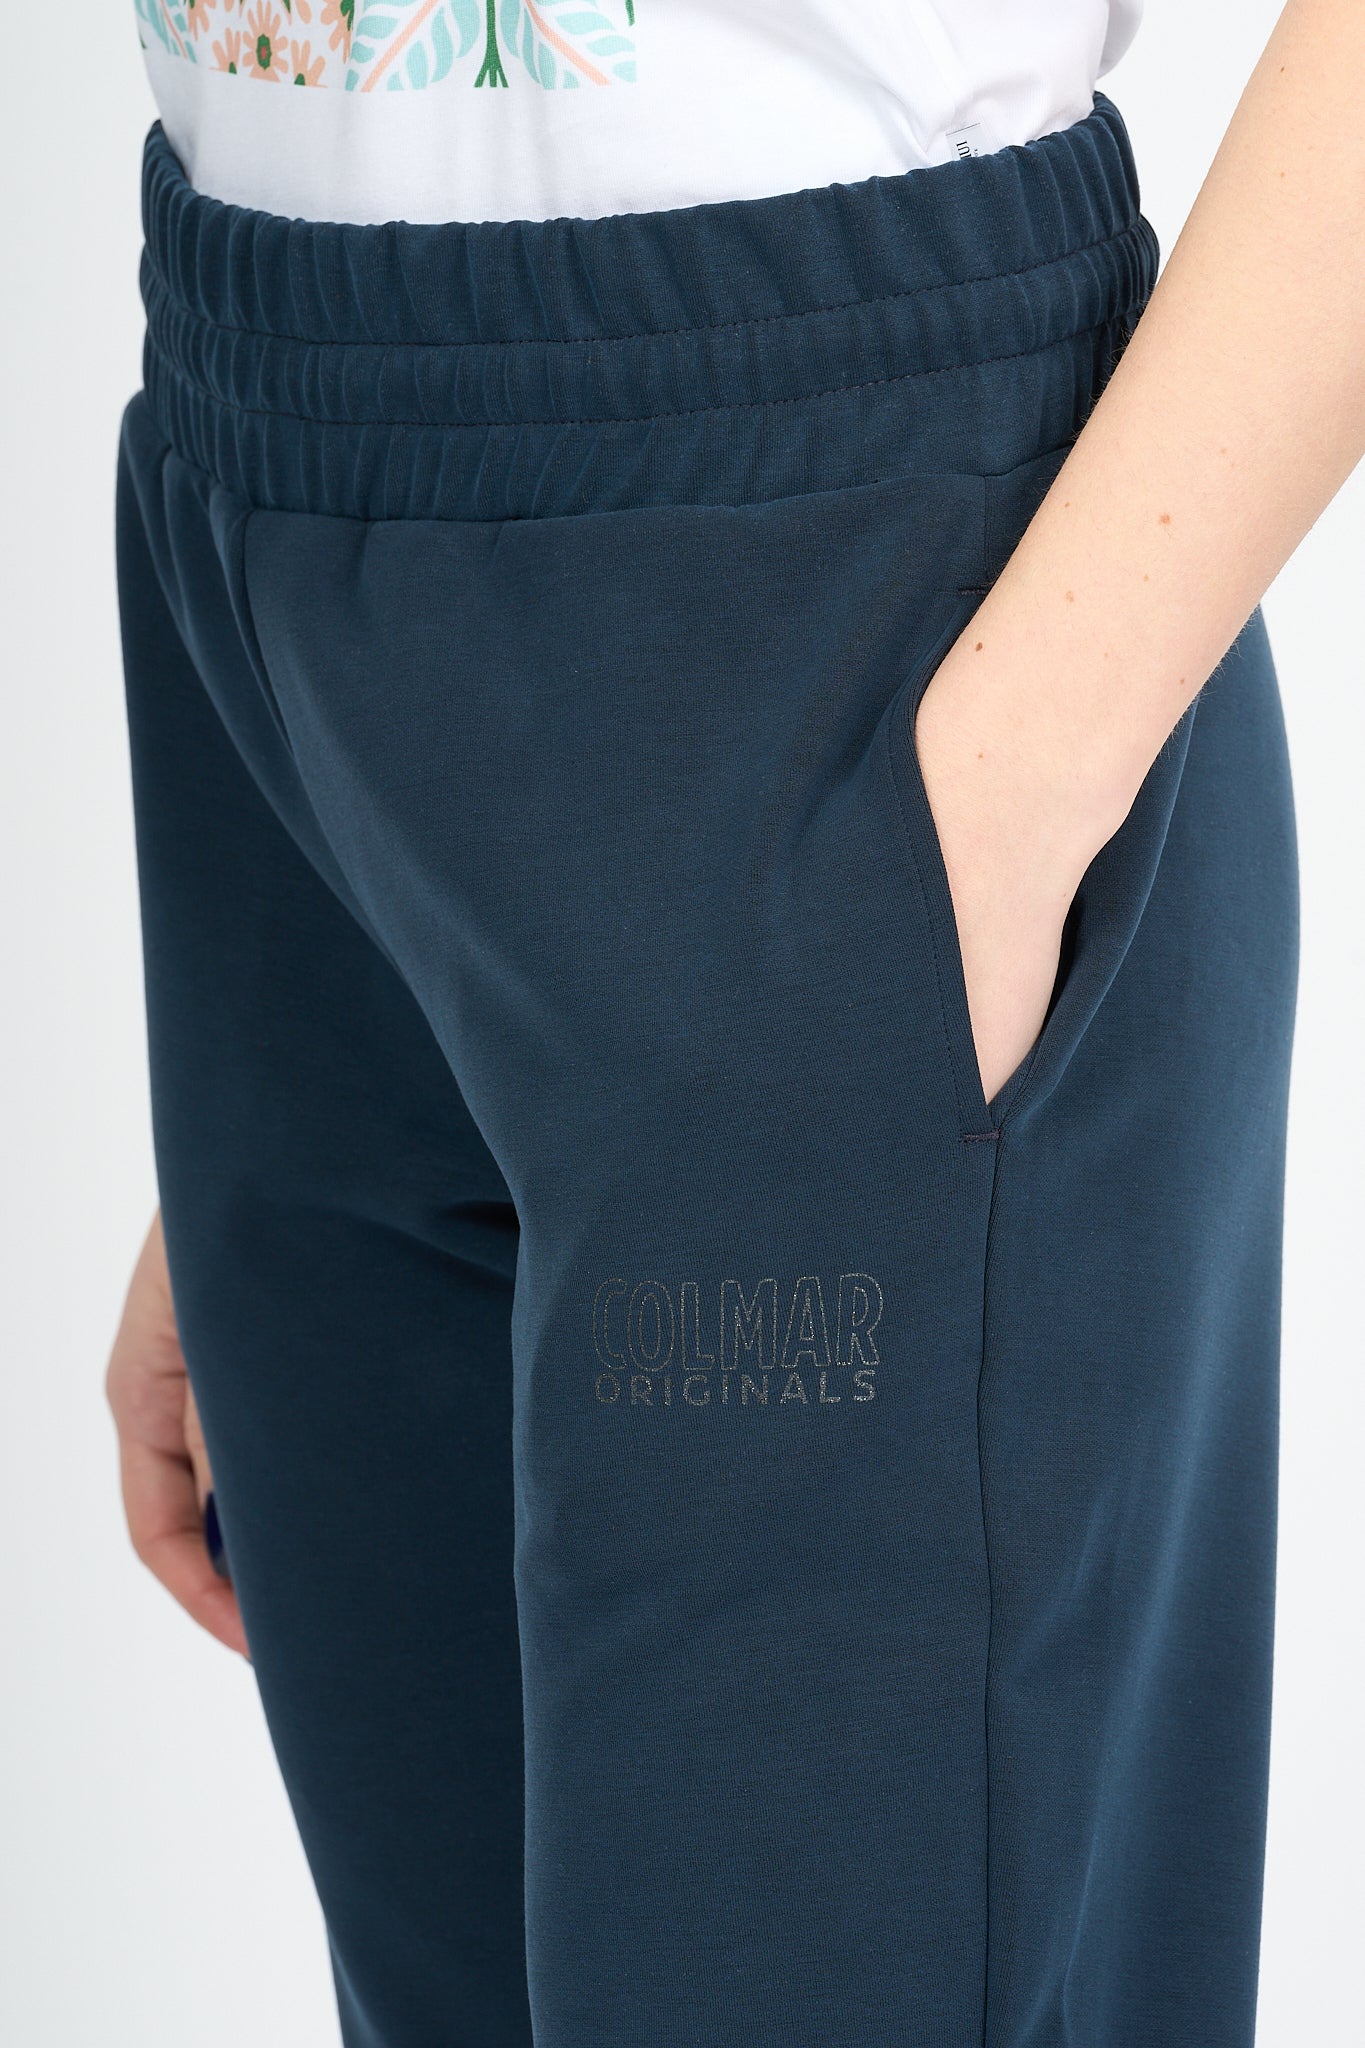 Colmar Originals Pantaloni Tuta Blu Donna-1